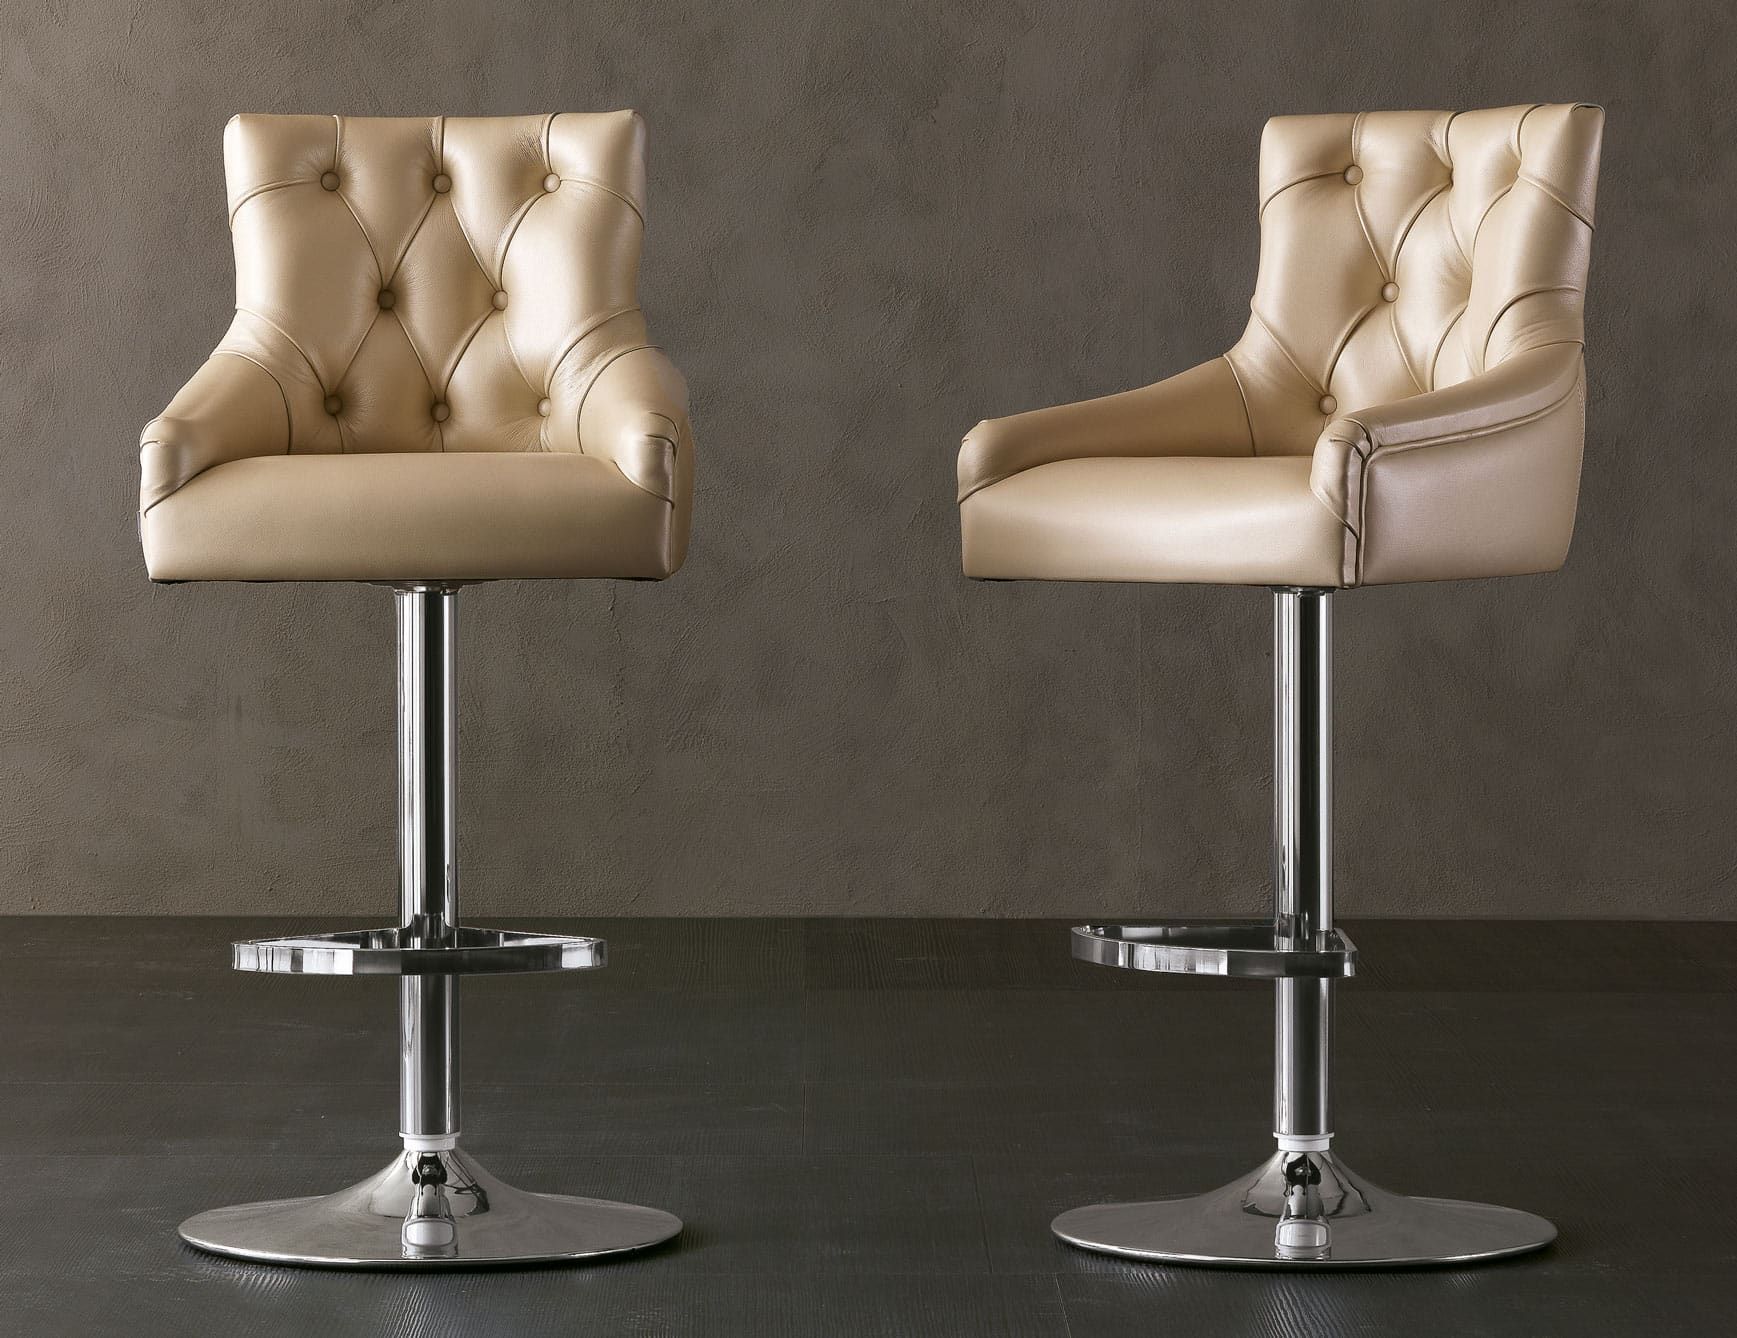 Itaca modern luxury stool with cream leather